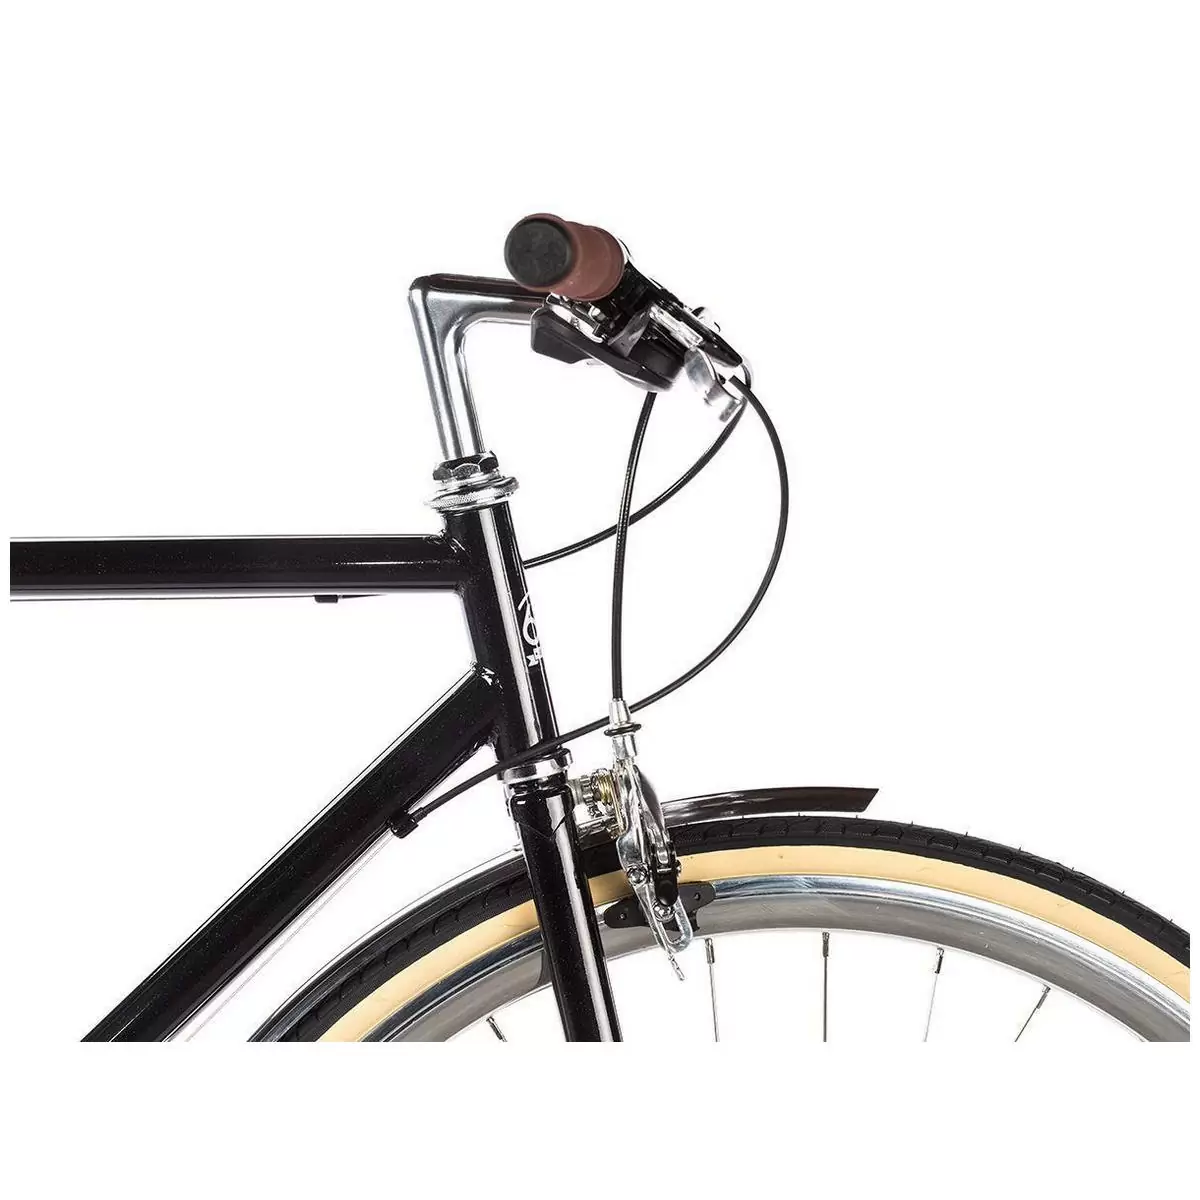 City bike ODYSSEY 8spd Delano black small 49cm #3